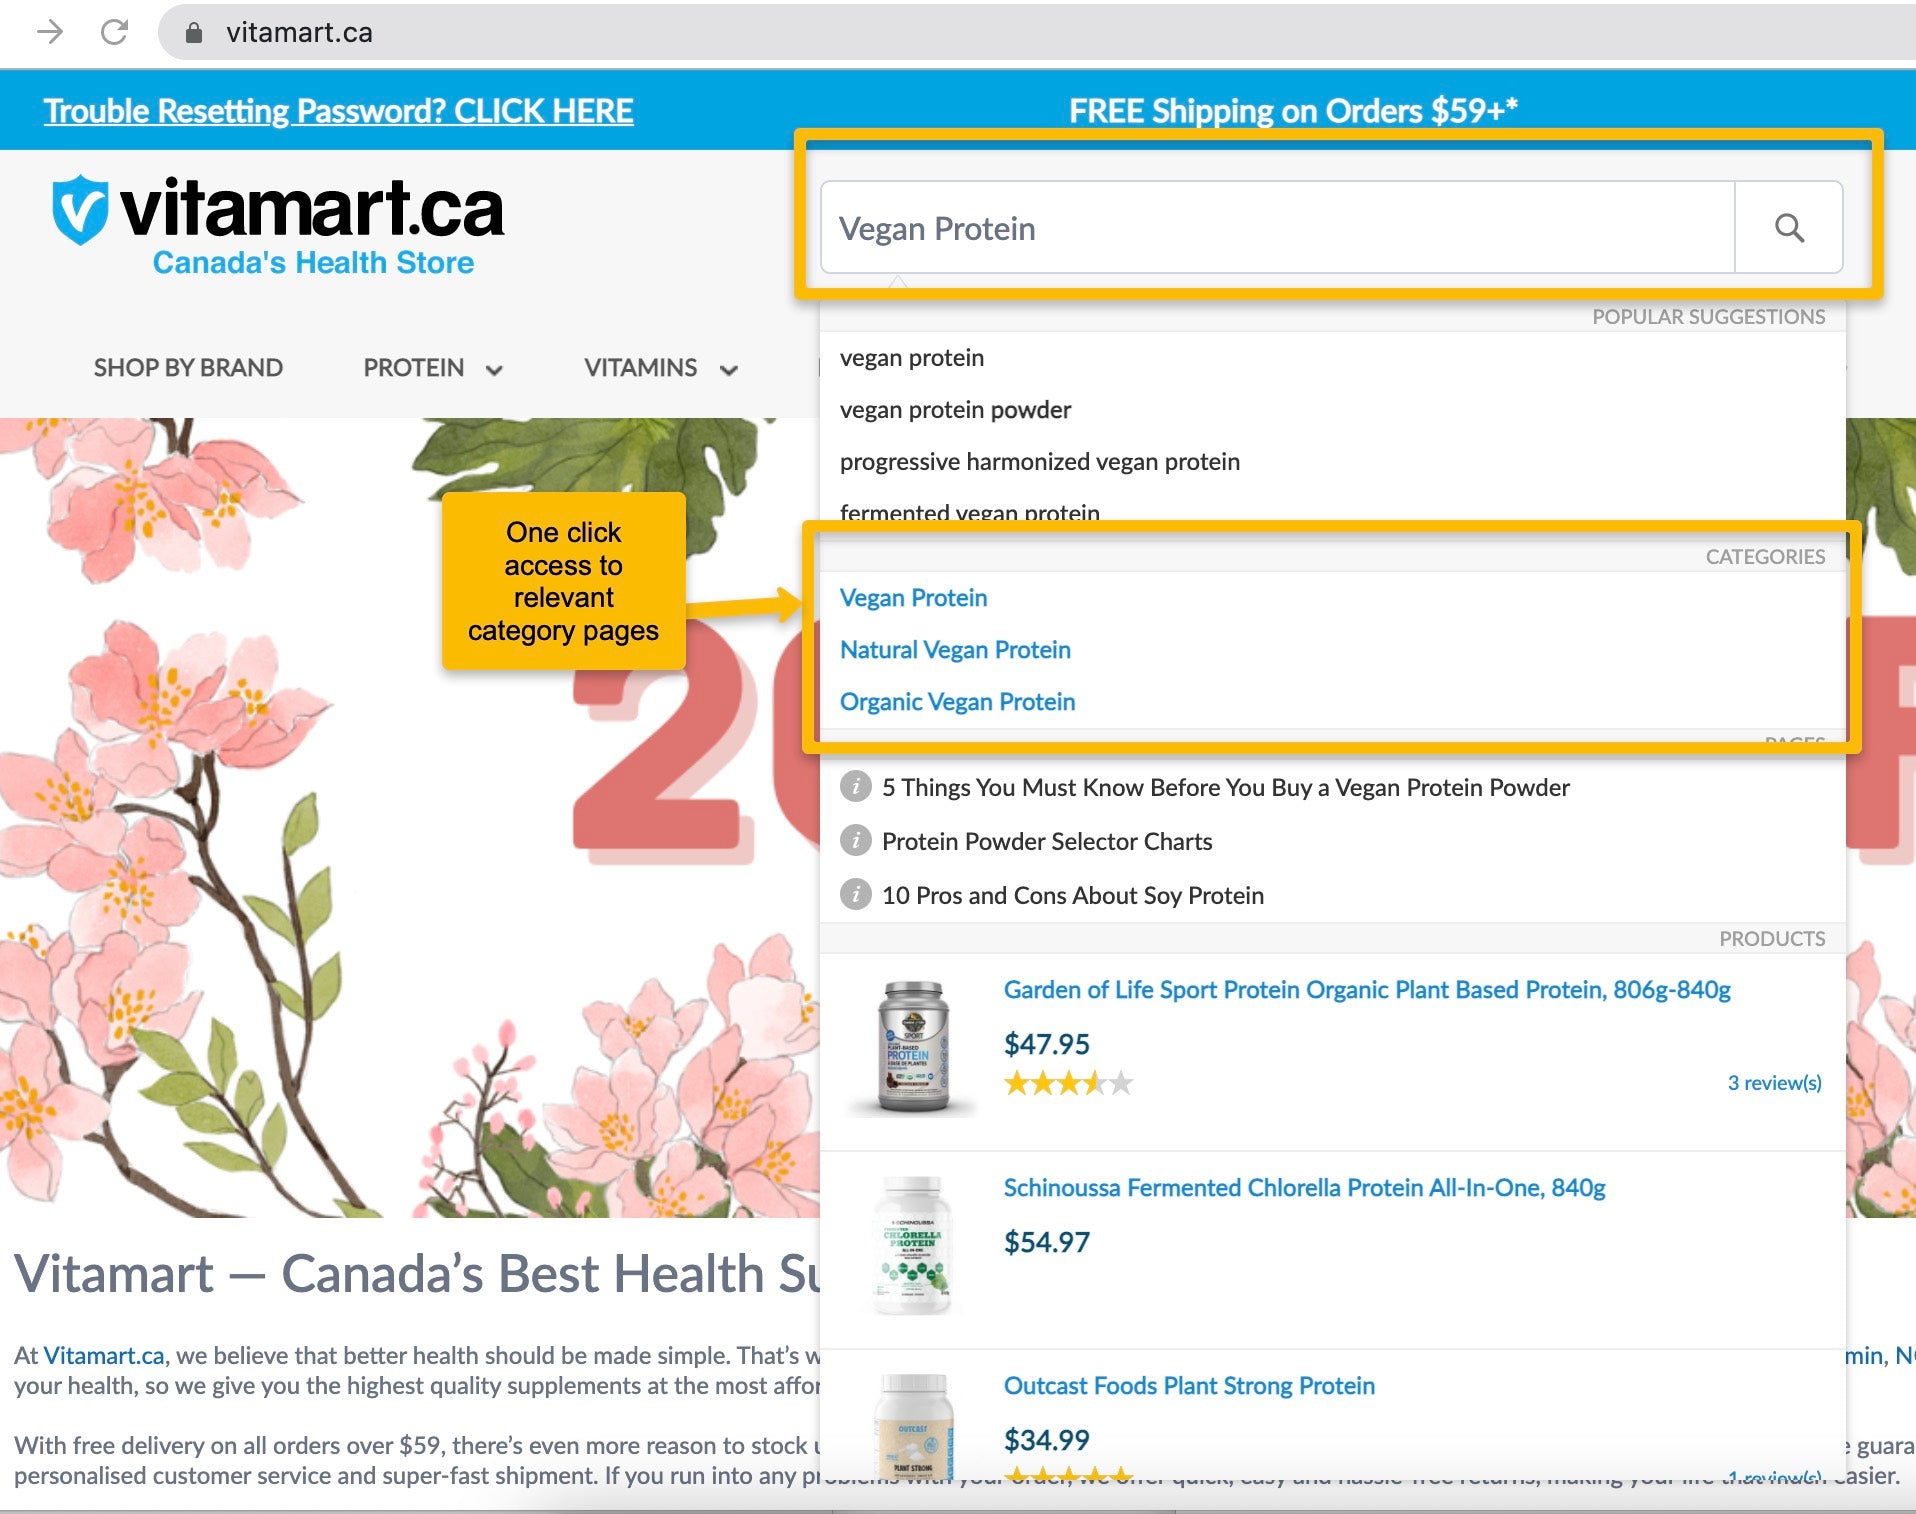 Vitamart.ca's upgraded search benefits